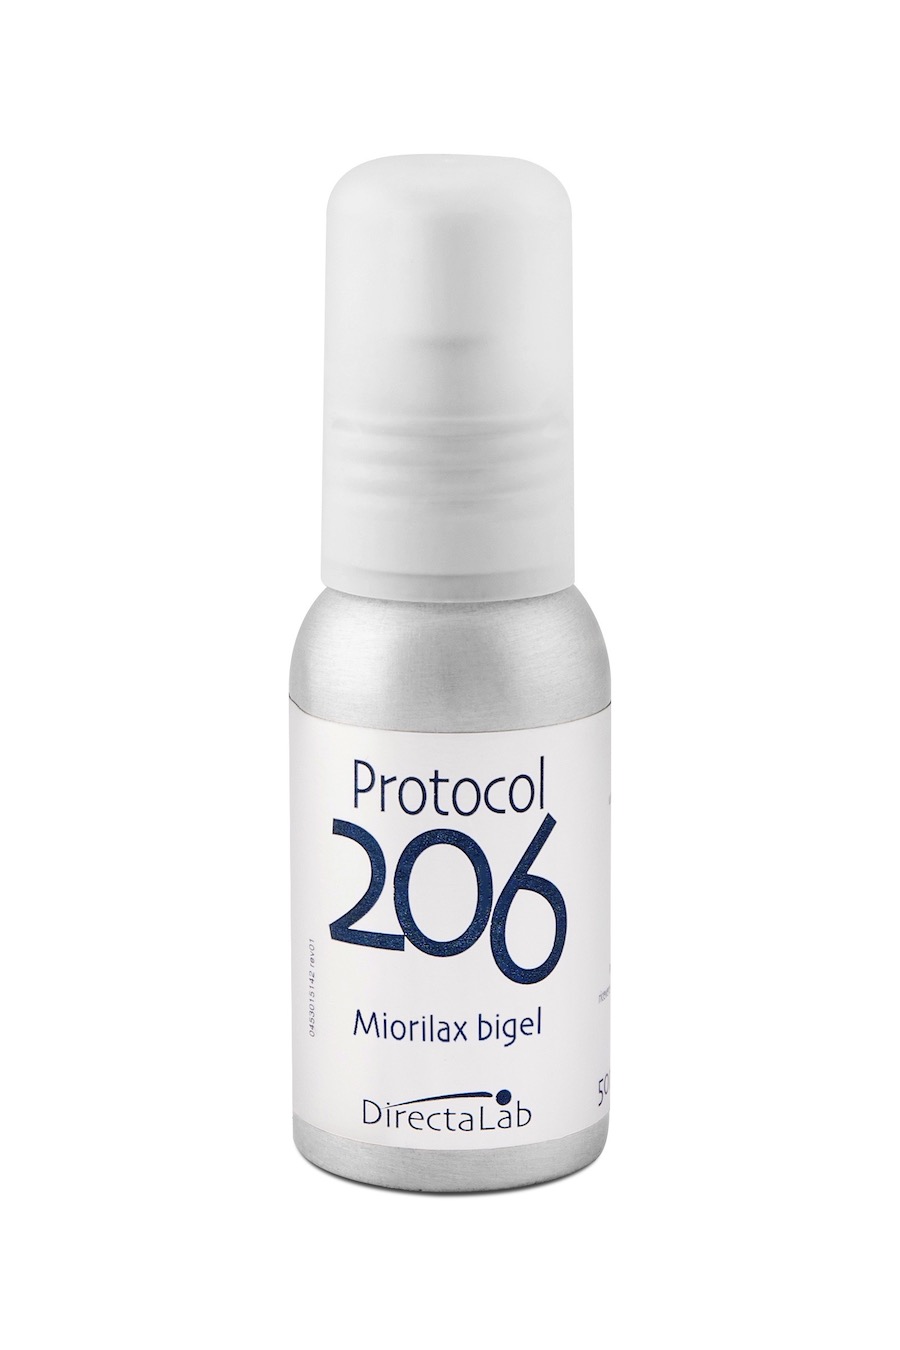 Protocol 206 Anti-age Miorilax Bigel